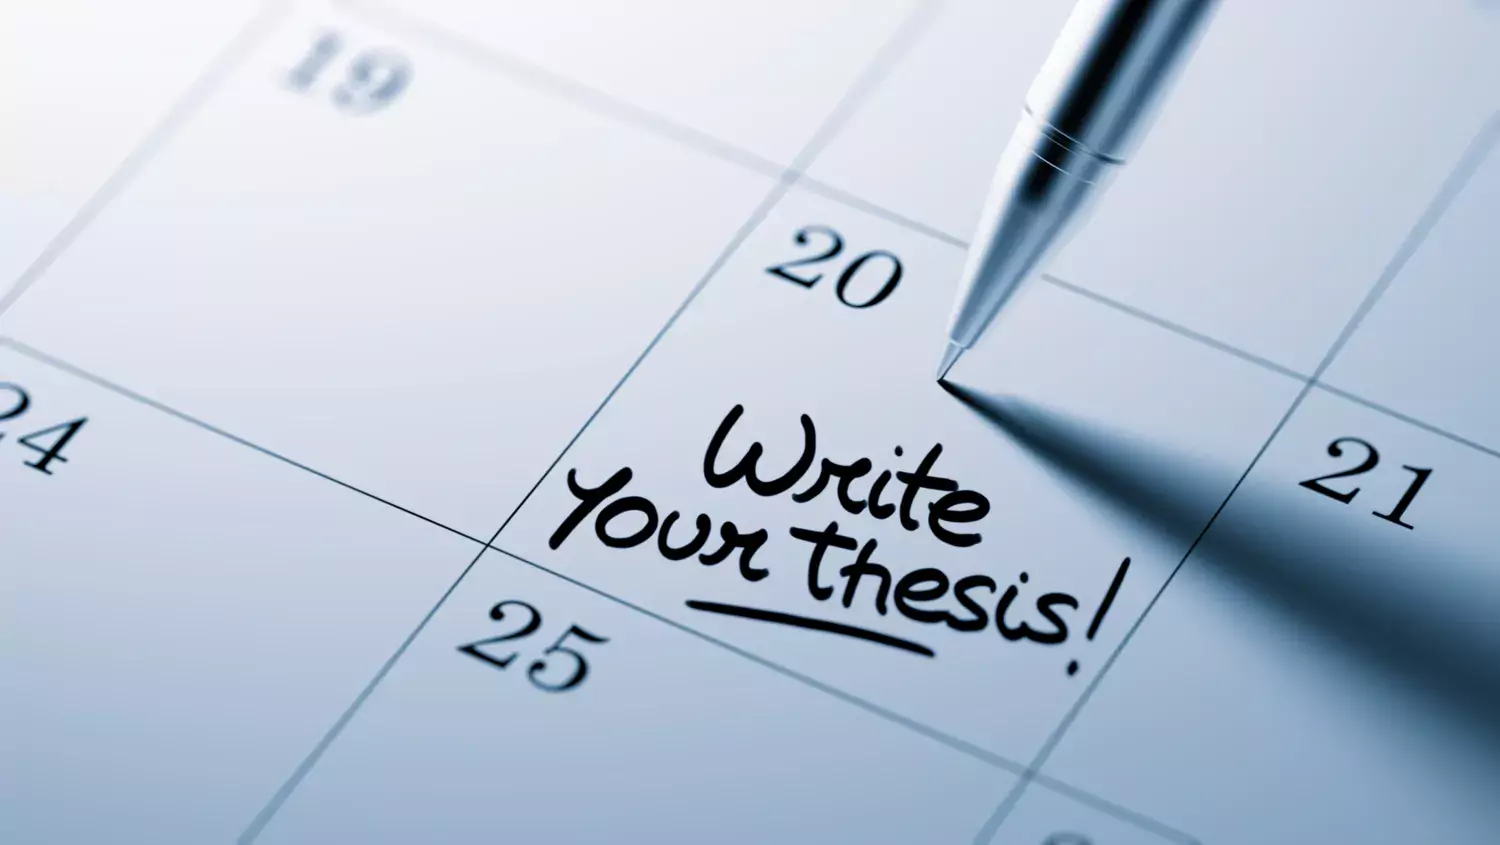 En anteckning i en bordkalender som det står "skriv din avhandling" på